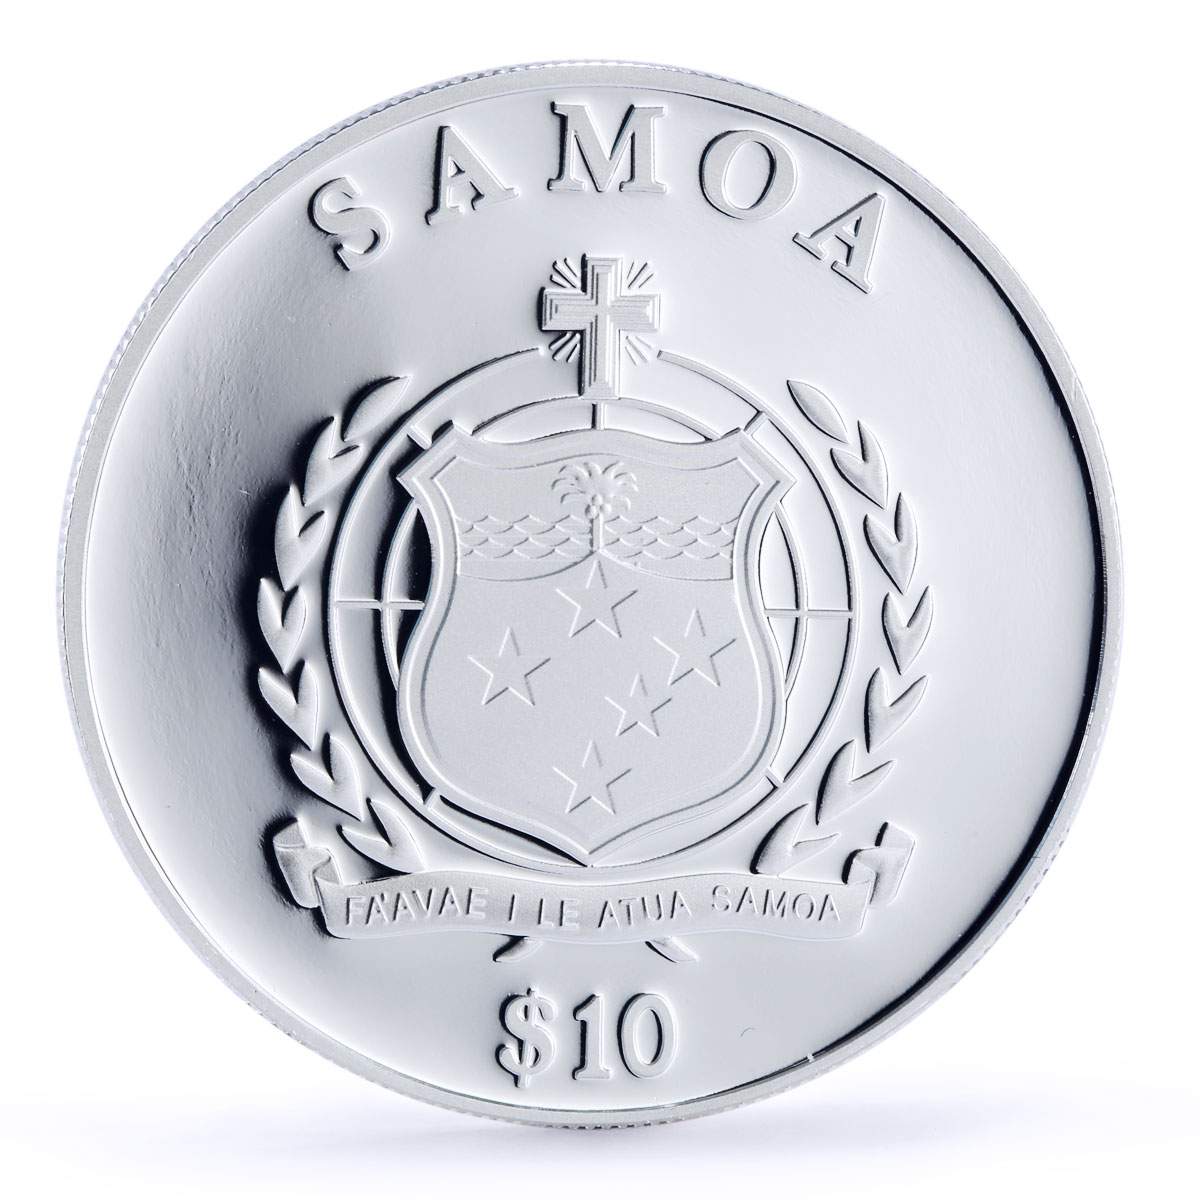 Samoa 10 dollars 8th Commandment Shall Not Bear Witness gilded silver coin 2010